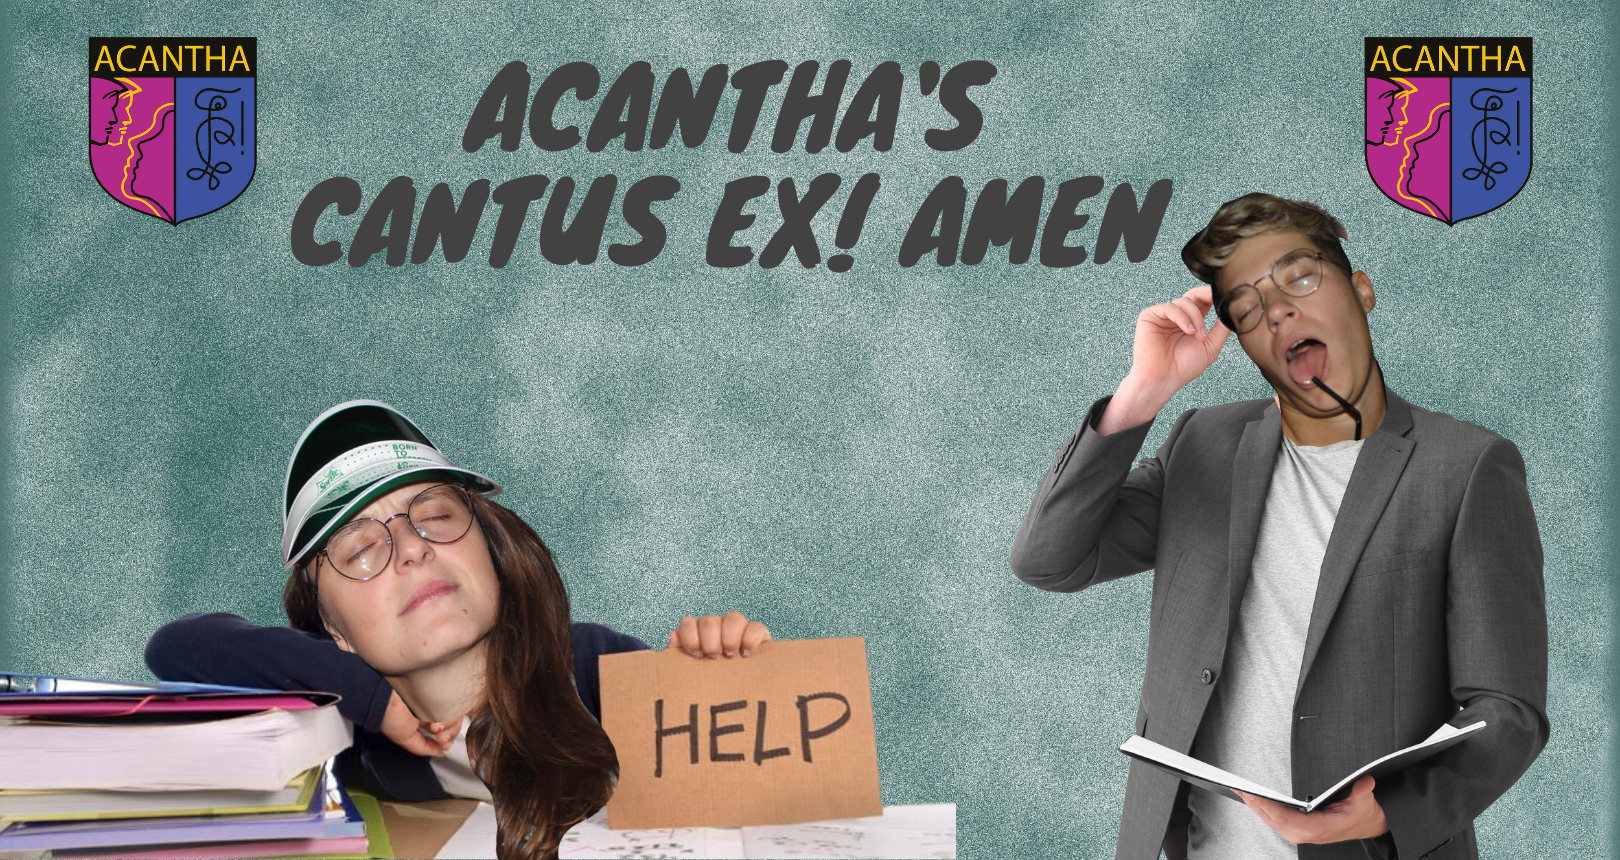 Acantha's cantus ex amen